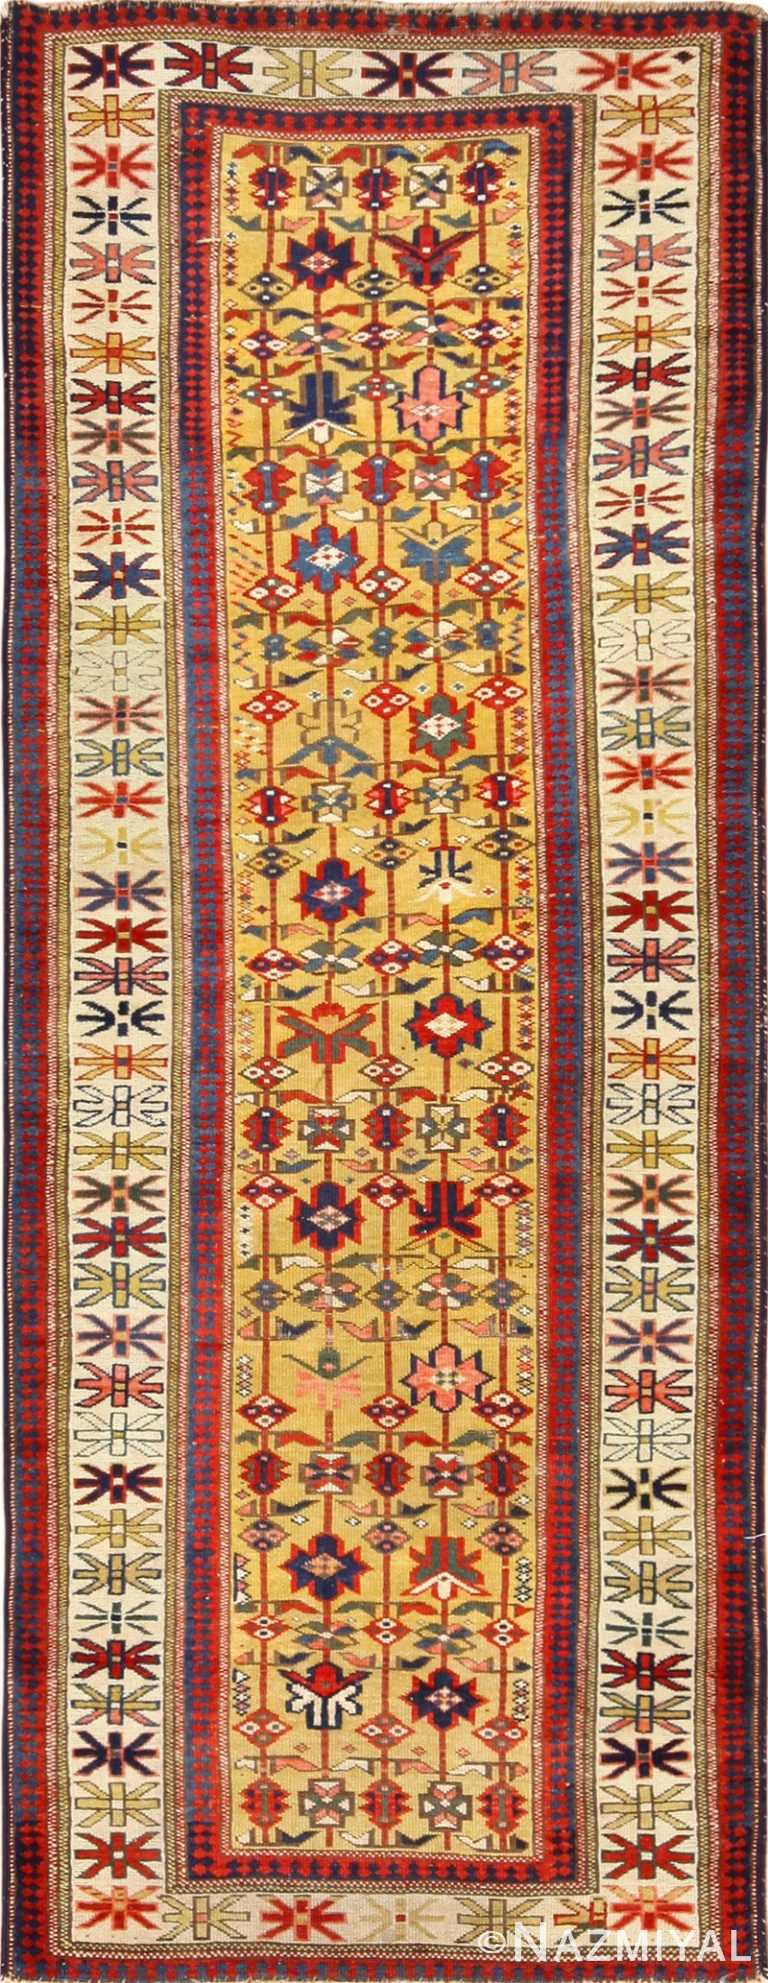 antique tribal kuba caucasian rug runner 49253 Nazmiyal